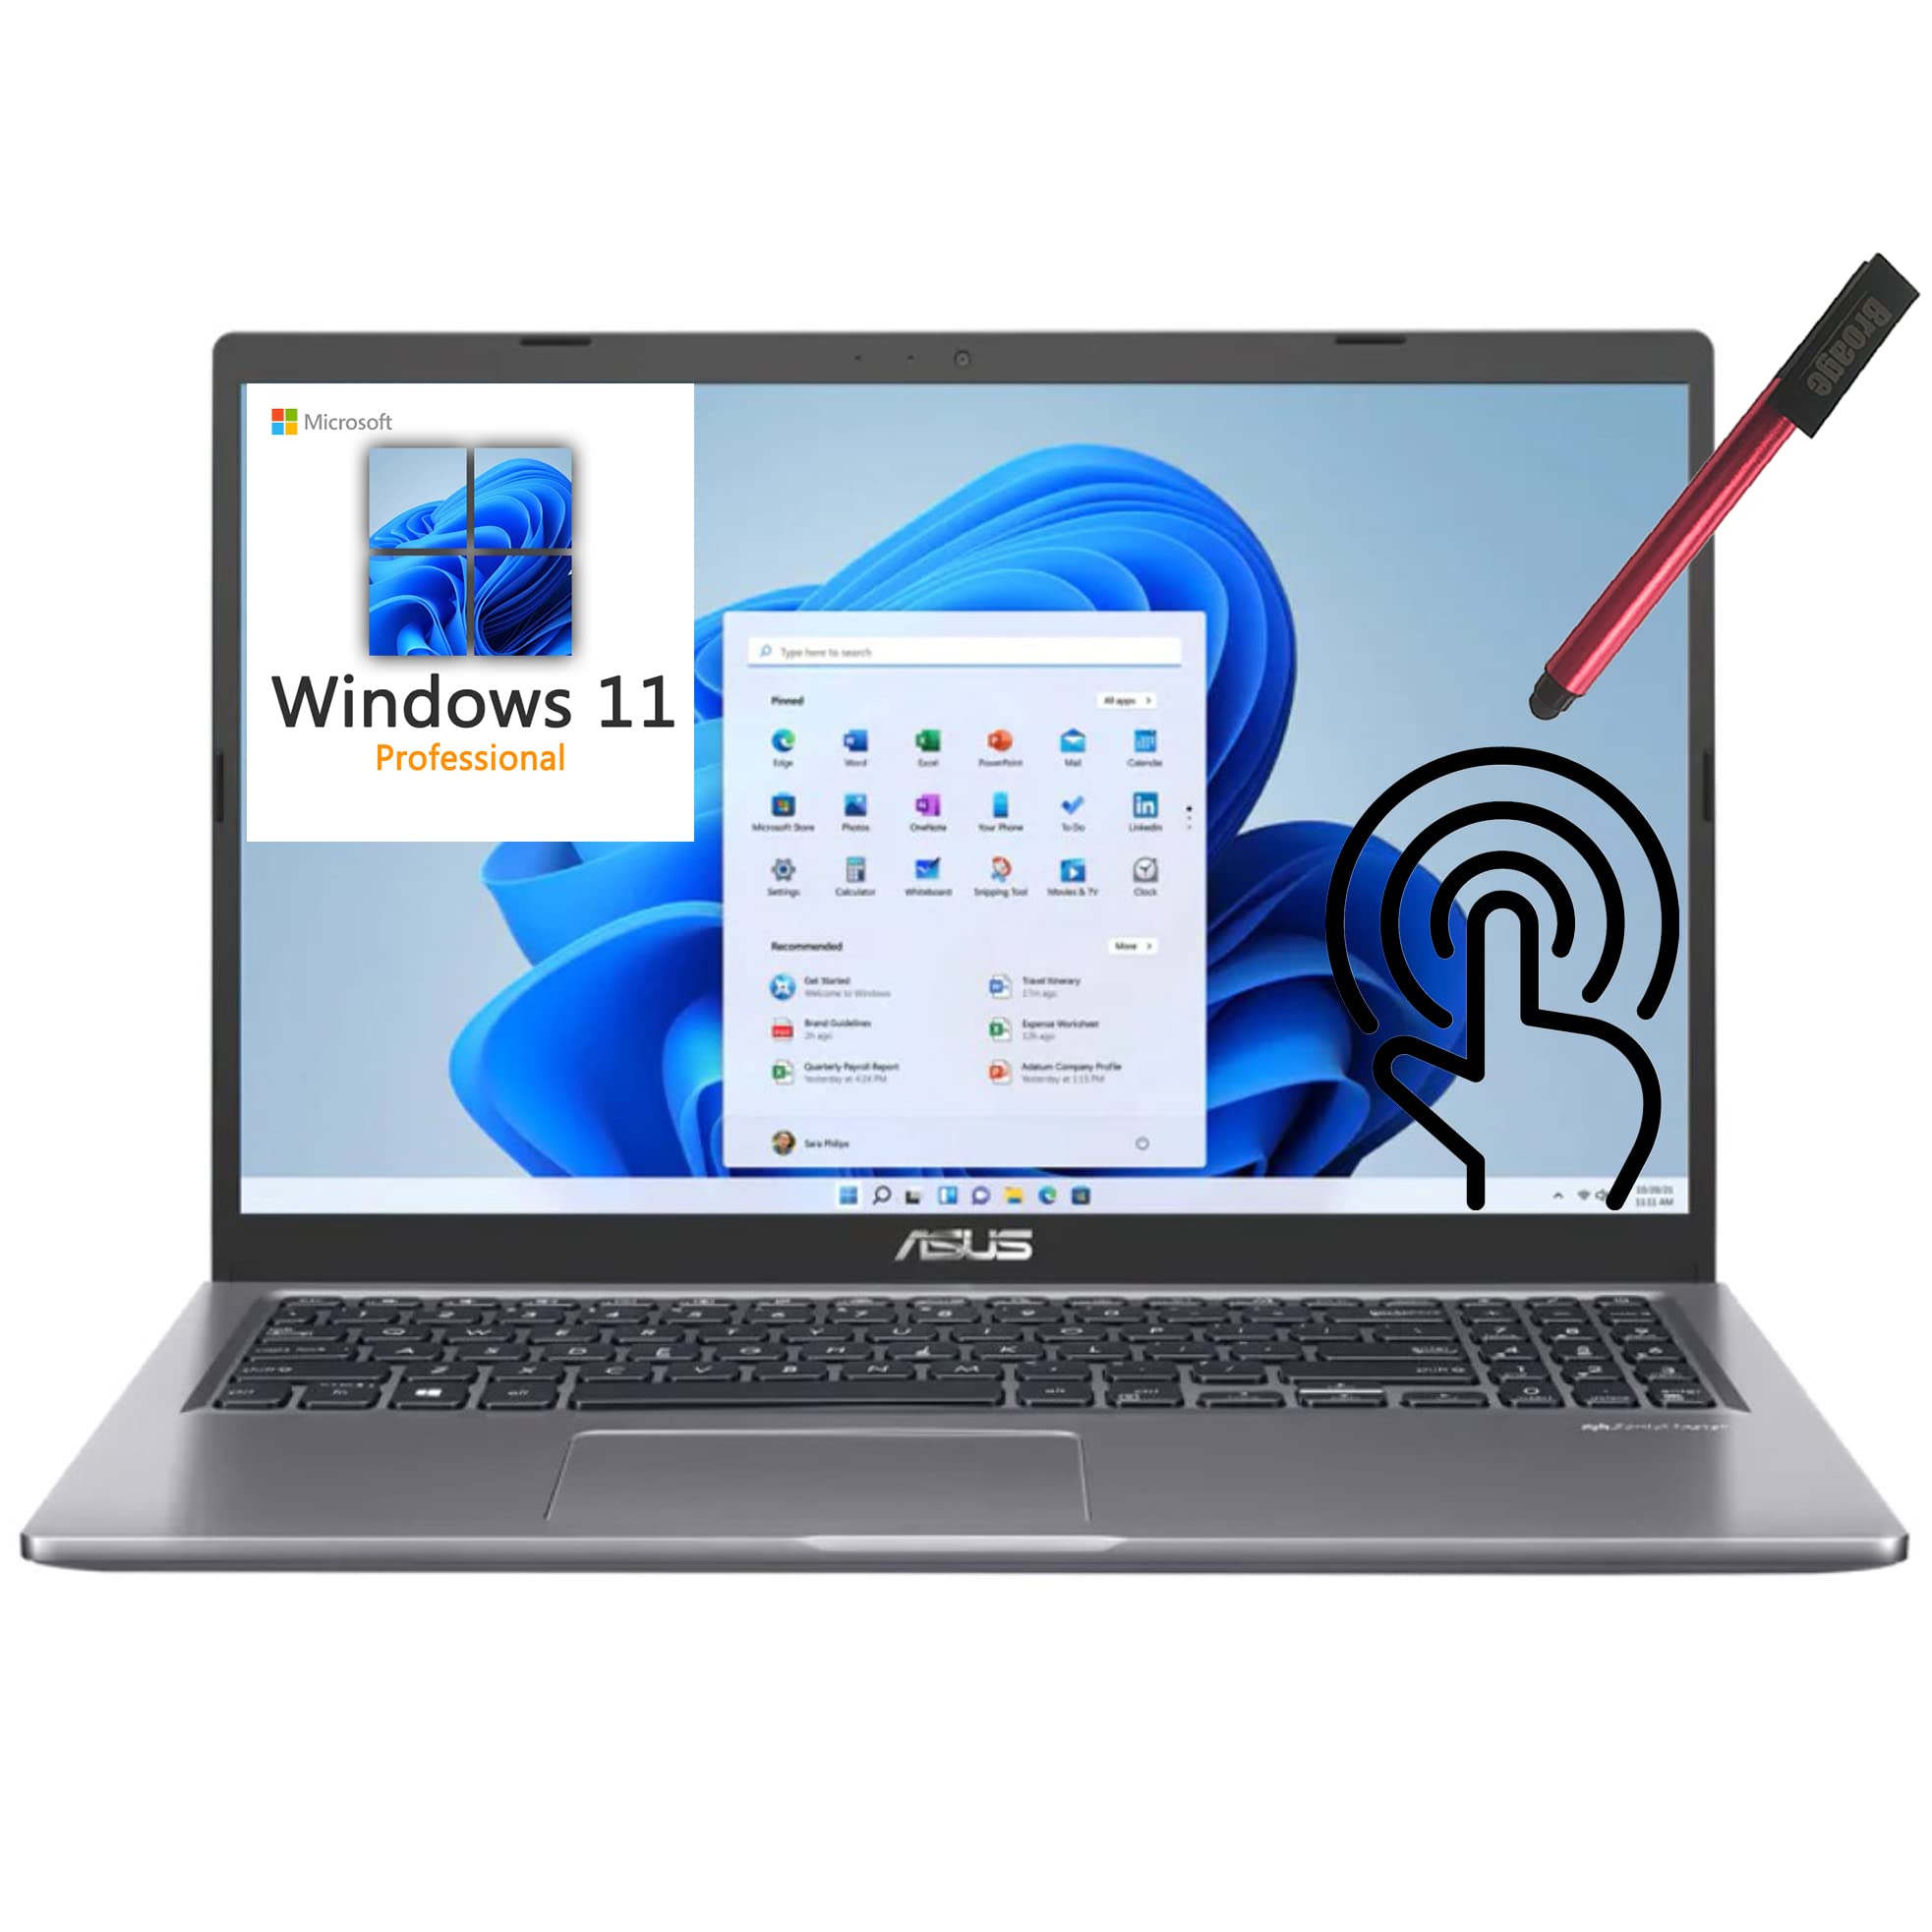 2022 Flagship ASUS VivoBook Business Thin Laptop, 15.6" HD Screen, Intel  i3-1005G1 (Upto 3.4GHz, Beat i5-8250U), 12GB RAM, 256GB PCIe SSD, HD  Graphic,